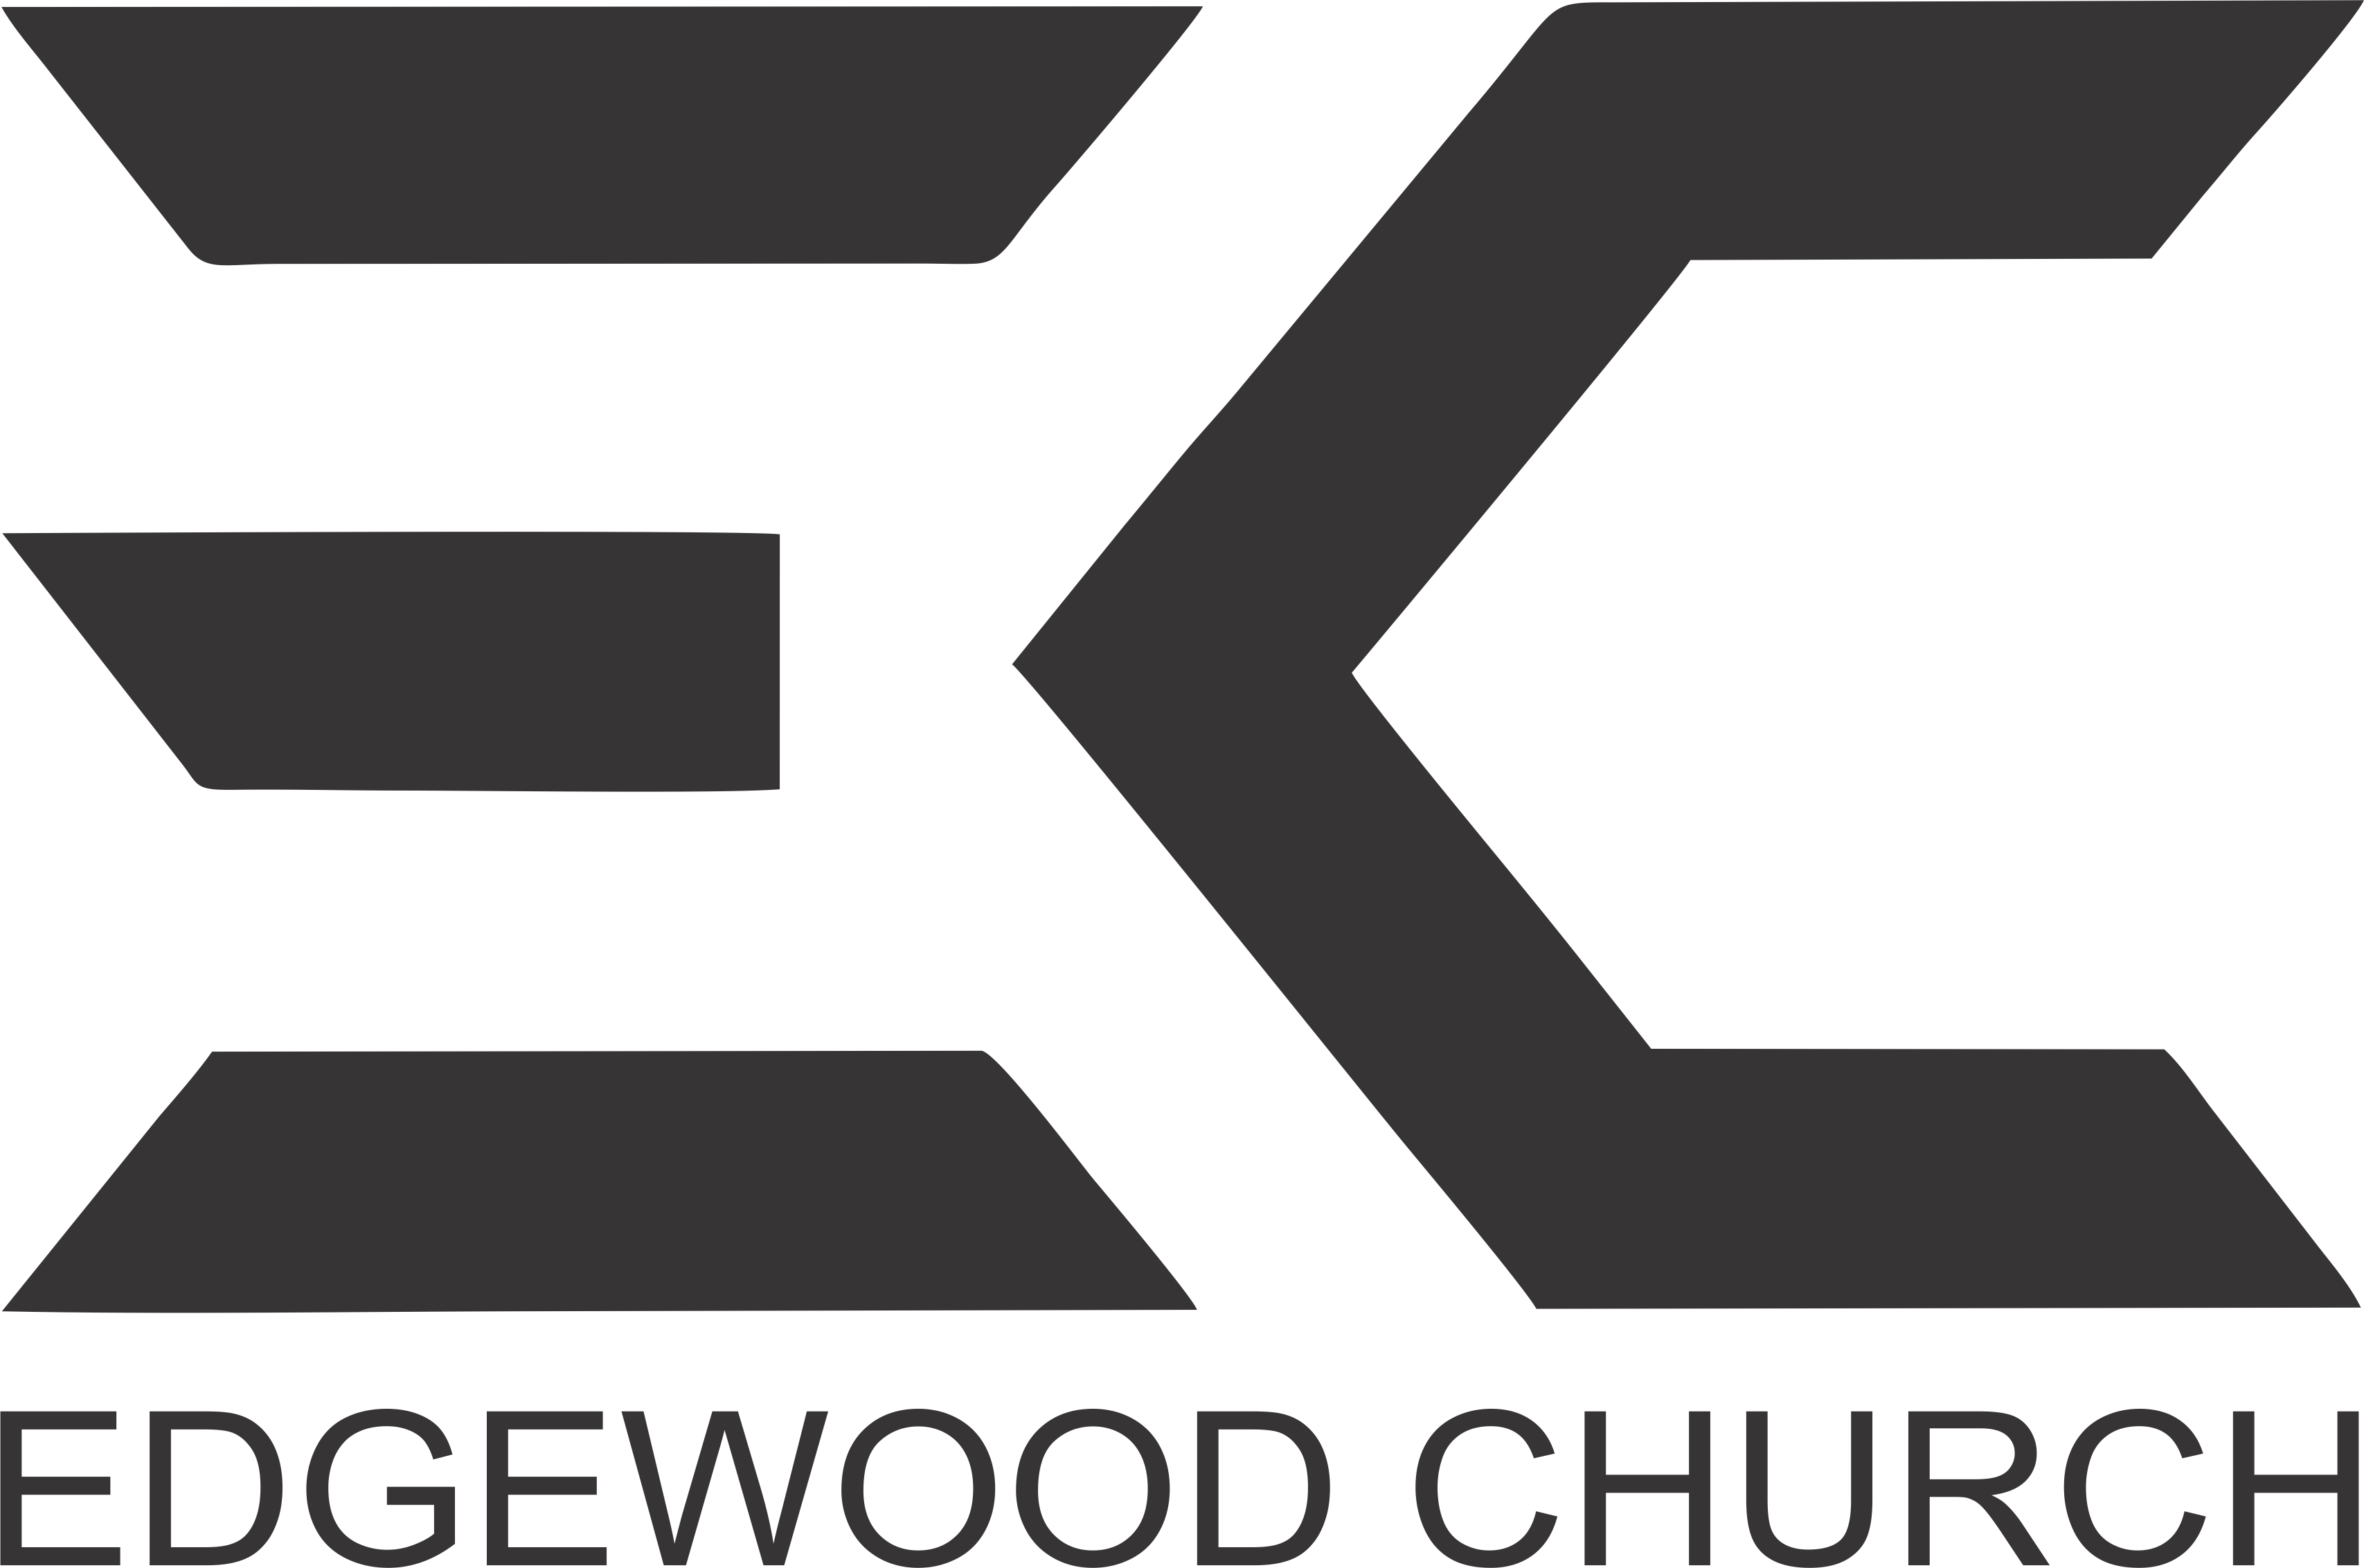 Edgewood Church